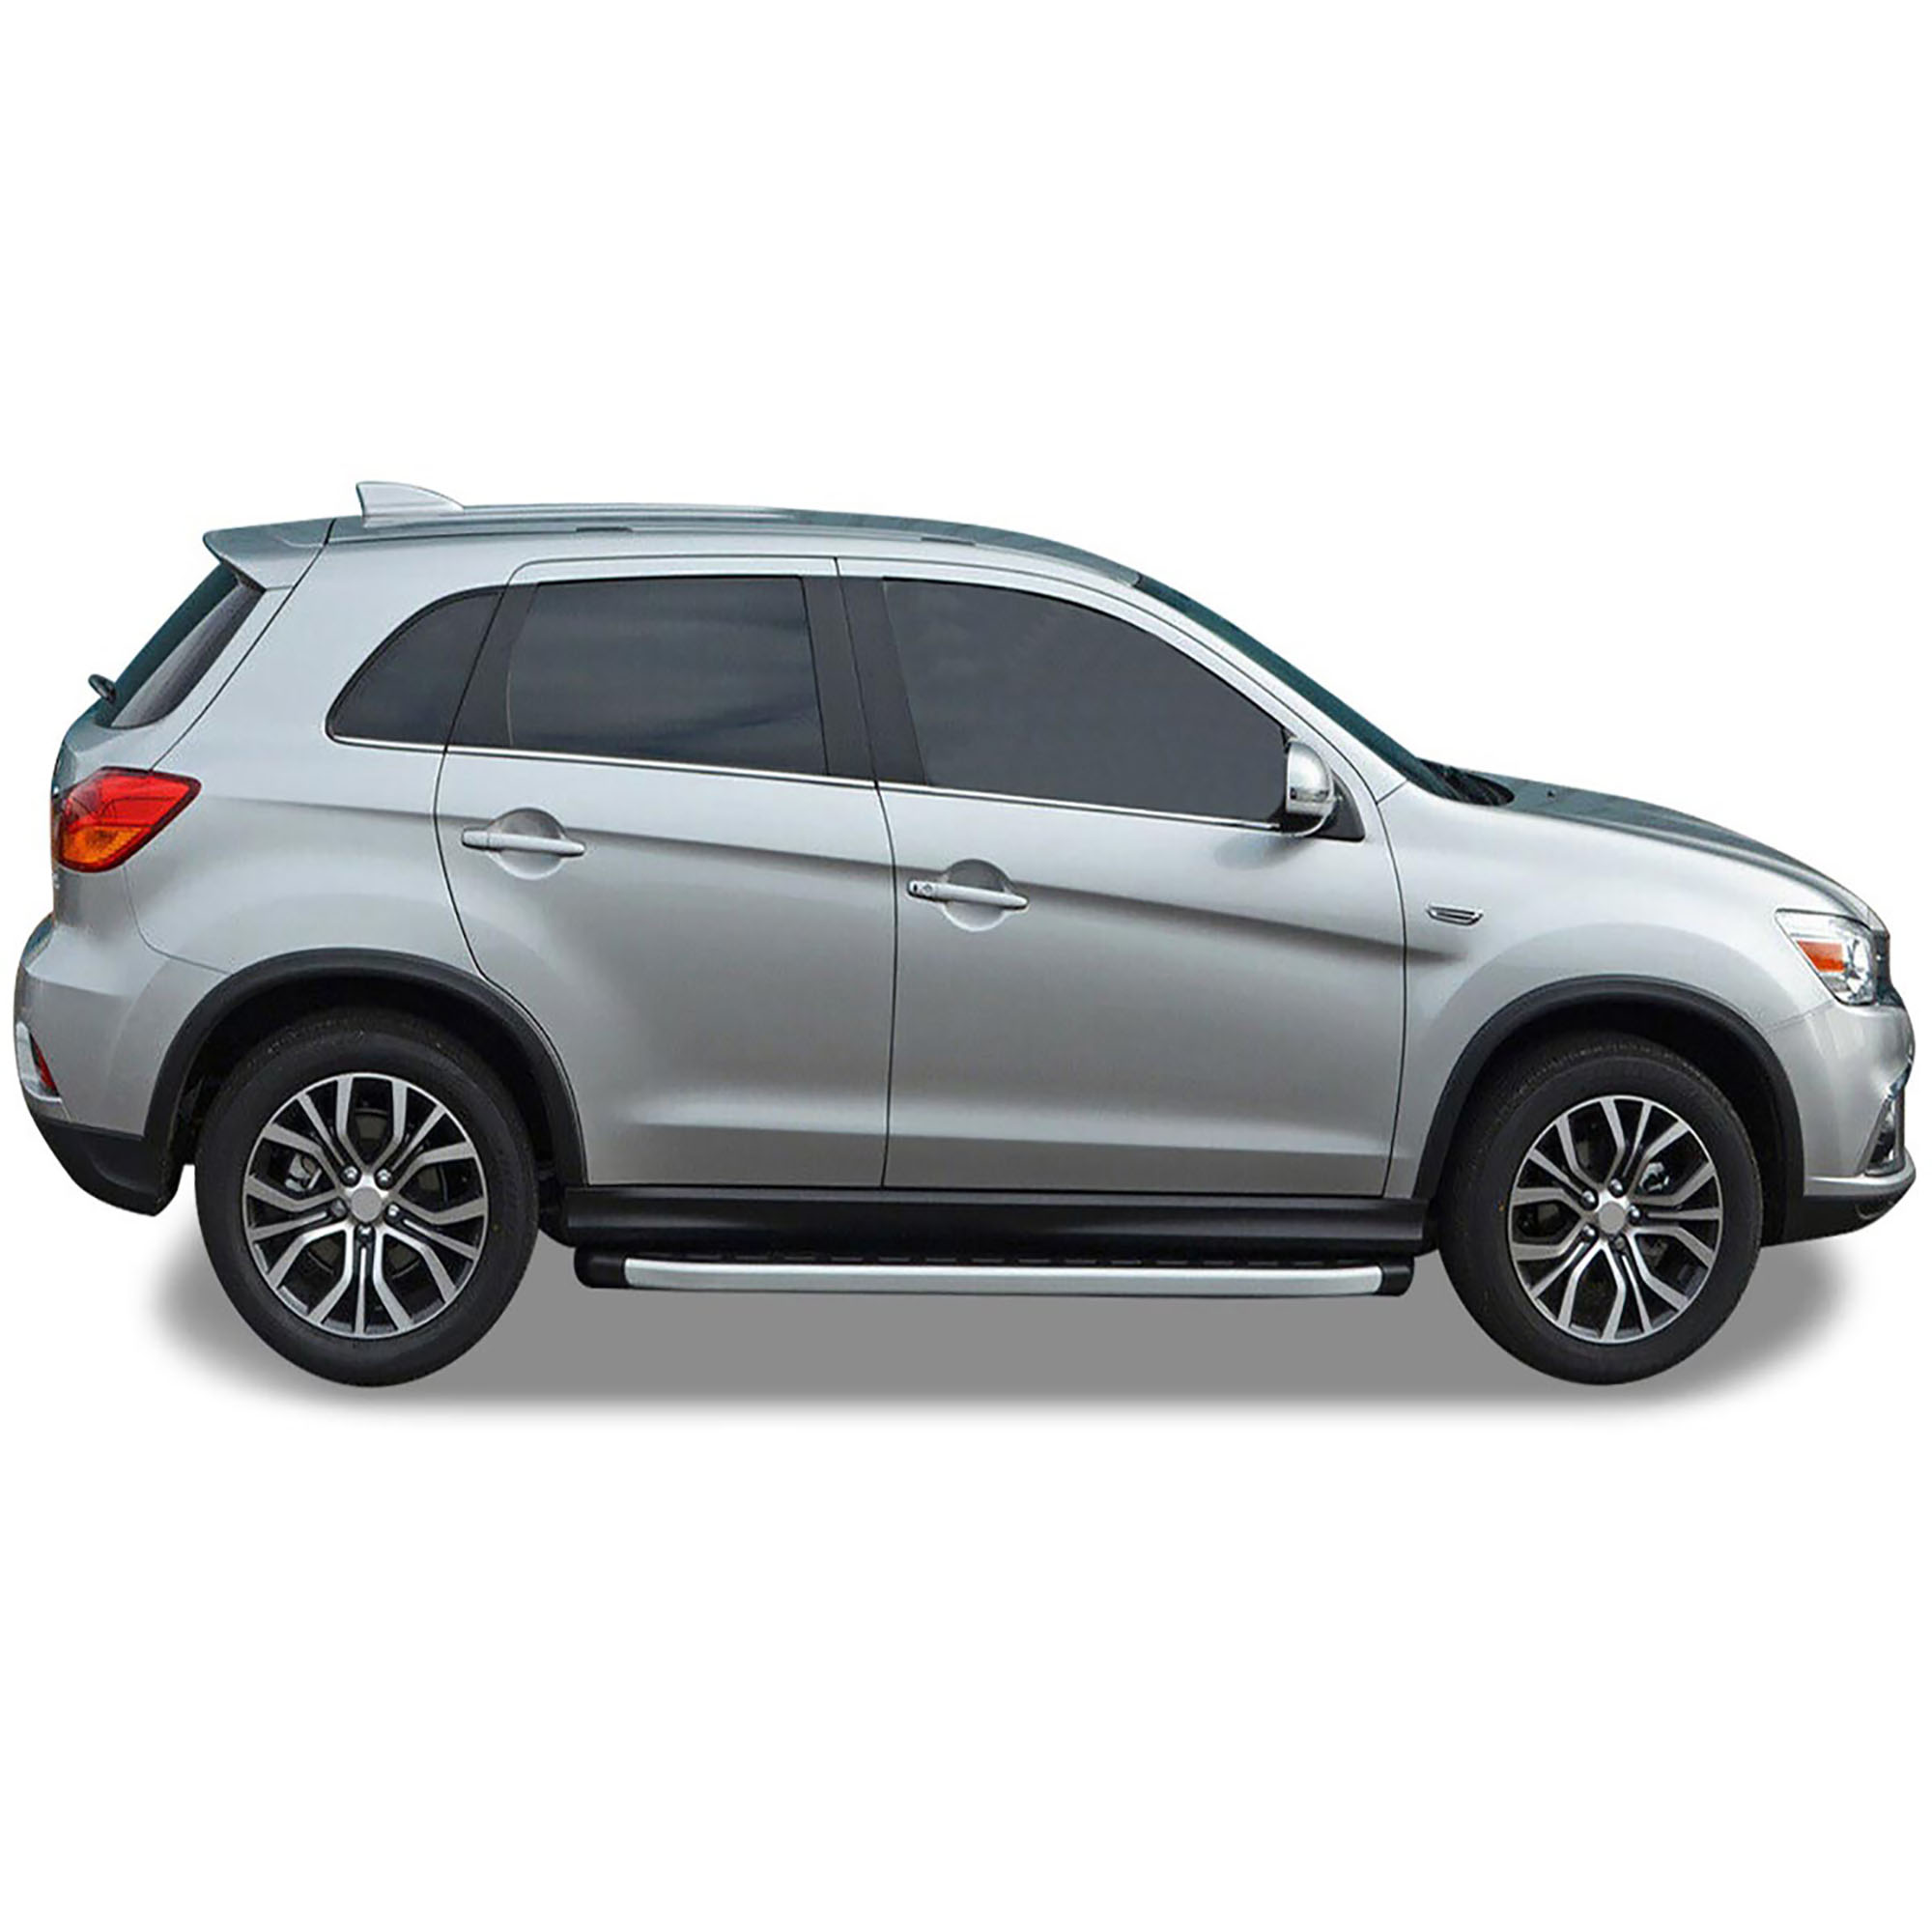 Hyundai Tucson (2015+) Yan Basamak - Proside - Aluminyum